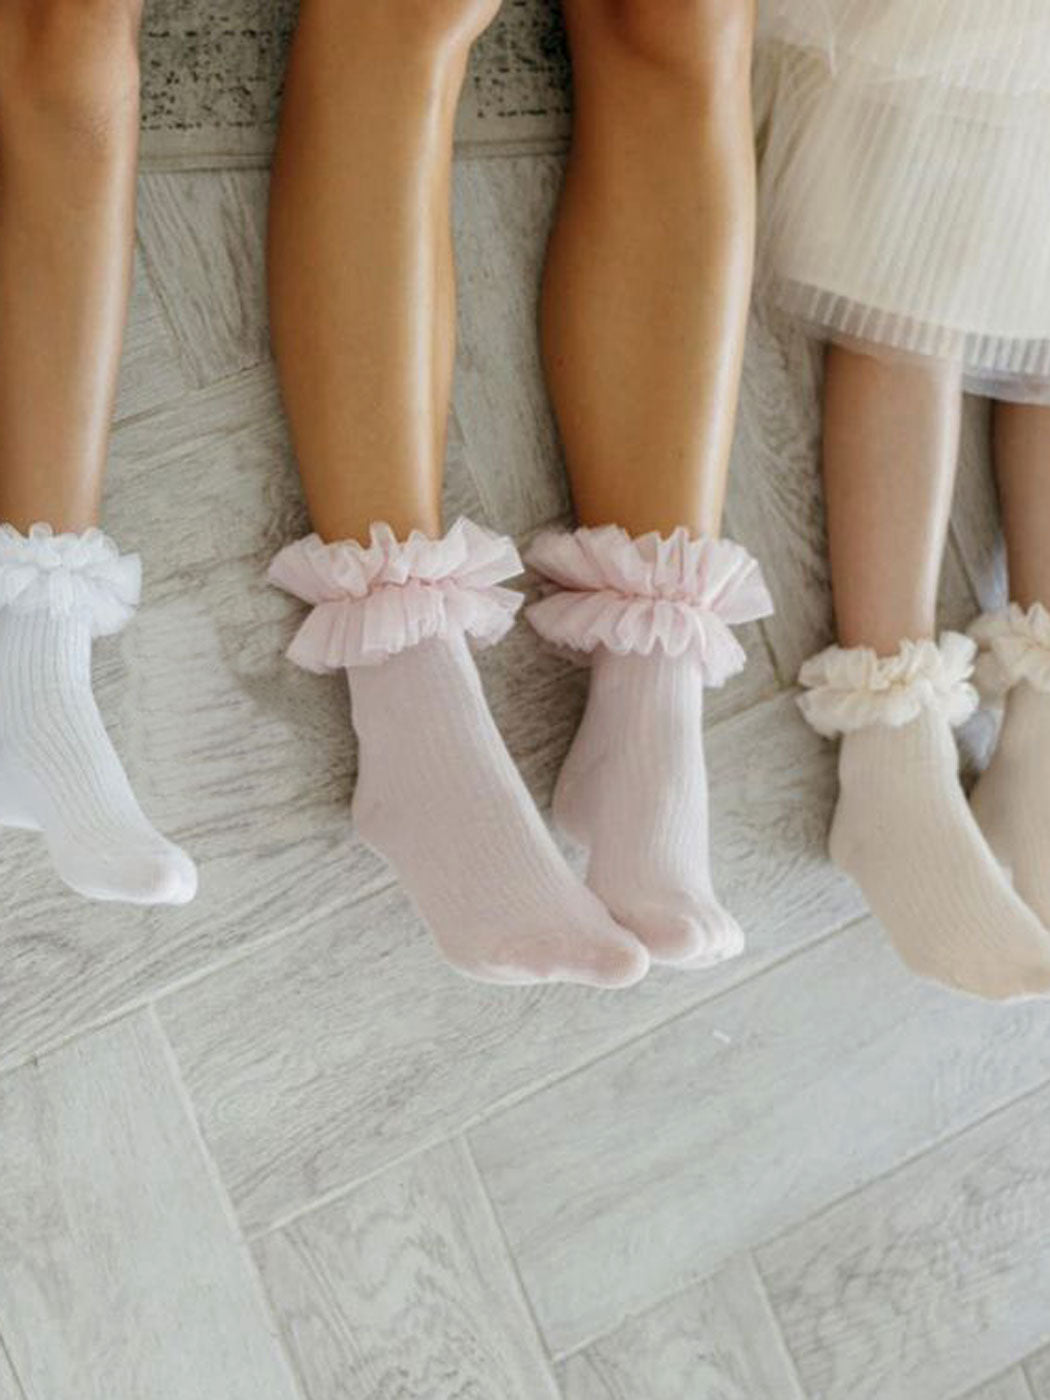 NENA BEBE girl's ribbed socks with tulle ruffle-5039 pink